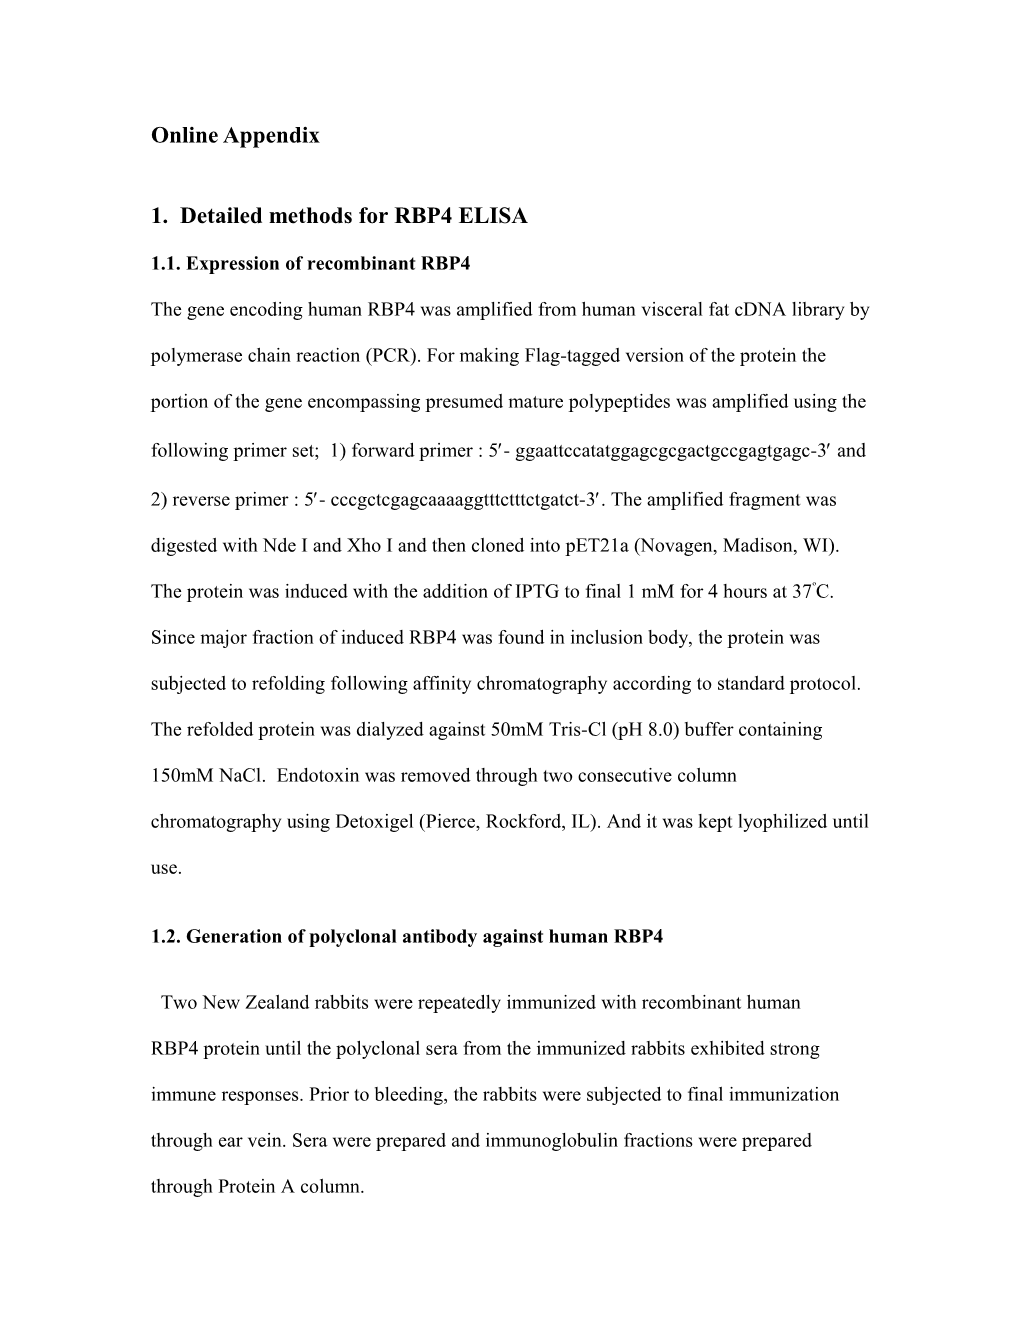 1. Detailed Methods for RBP4 ELISA